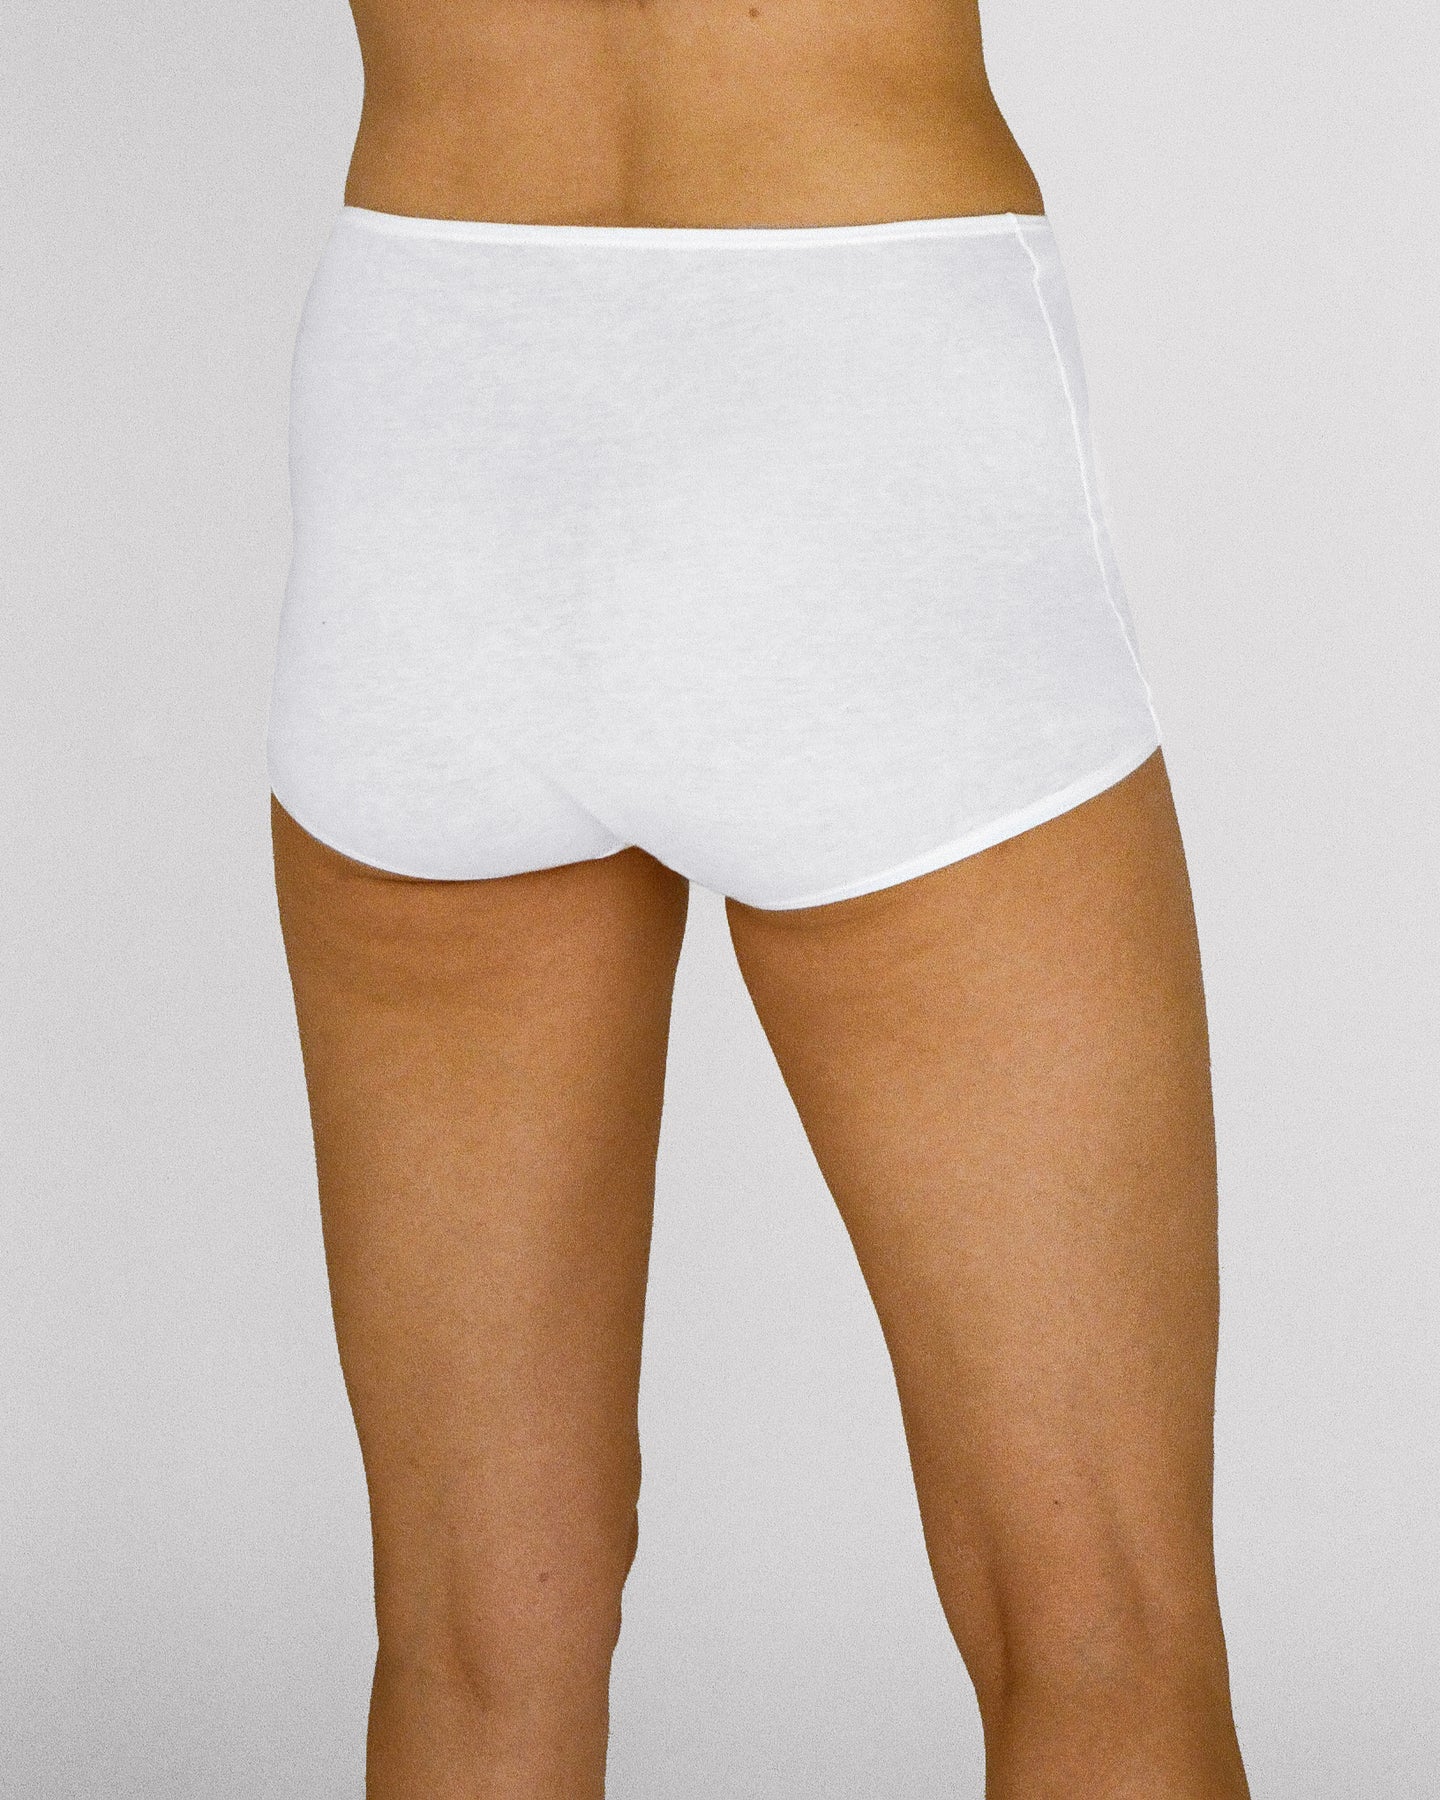 wholesale dance short panty underwear sexy